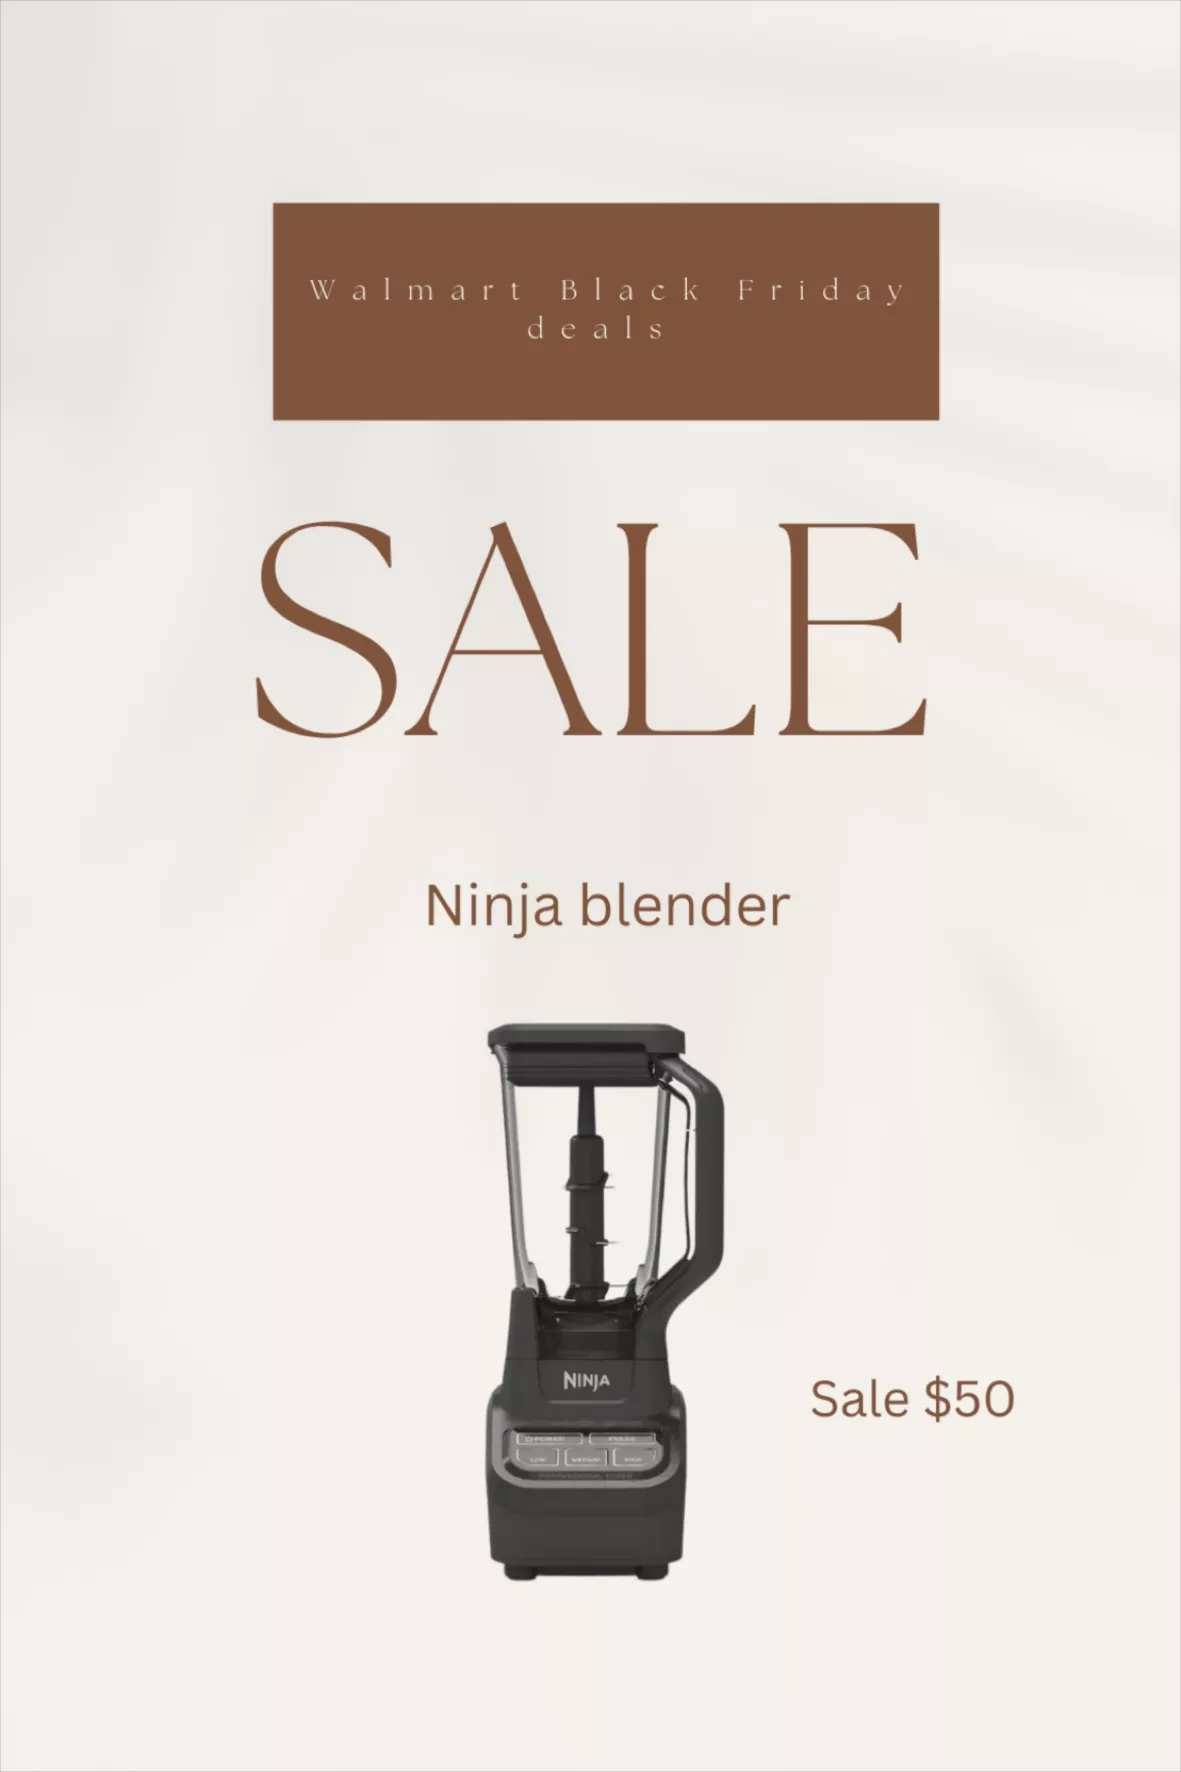 Which Ninja blender should I buy on Black Friday?